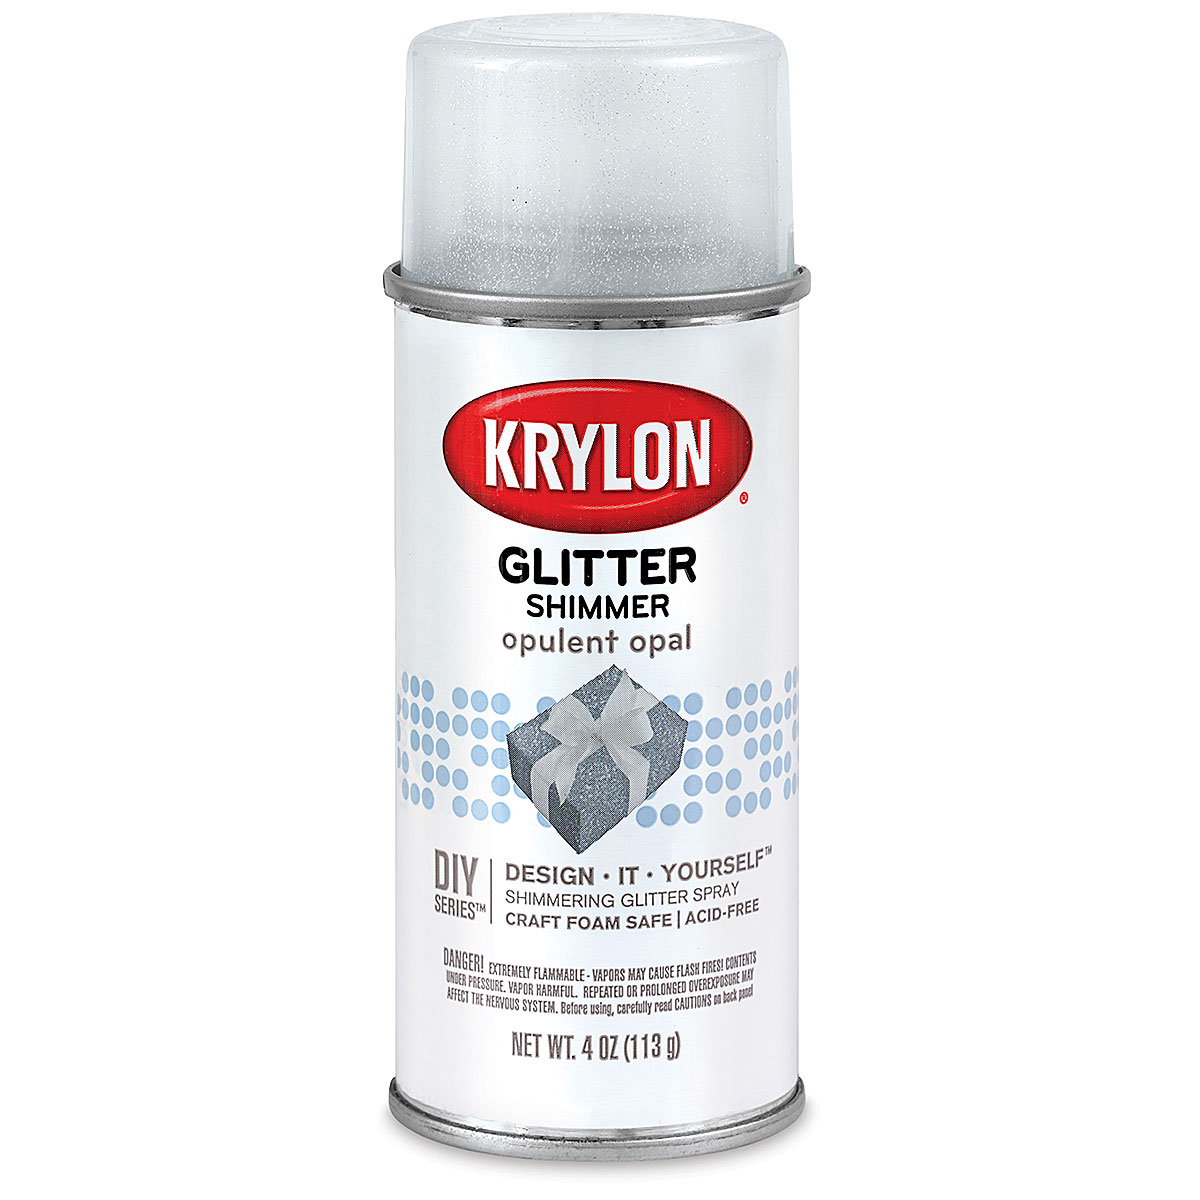 Krylon Glitter Blast Spray Paint, 5.7 Oz., Silver Flash